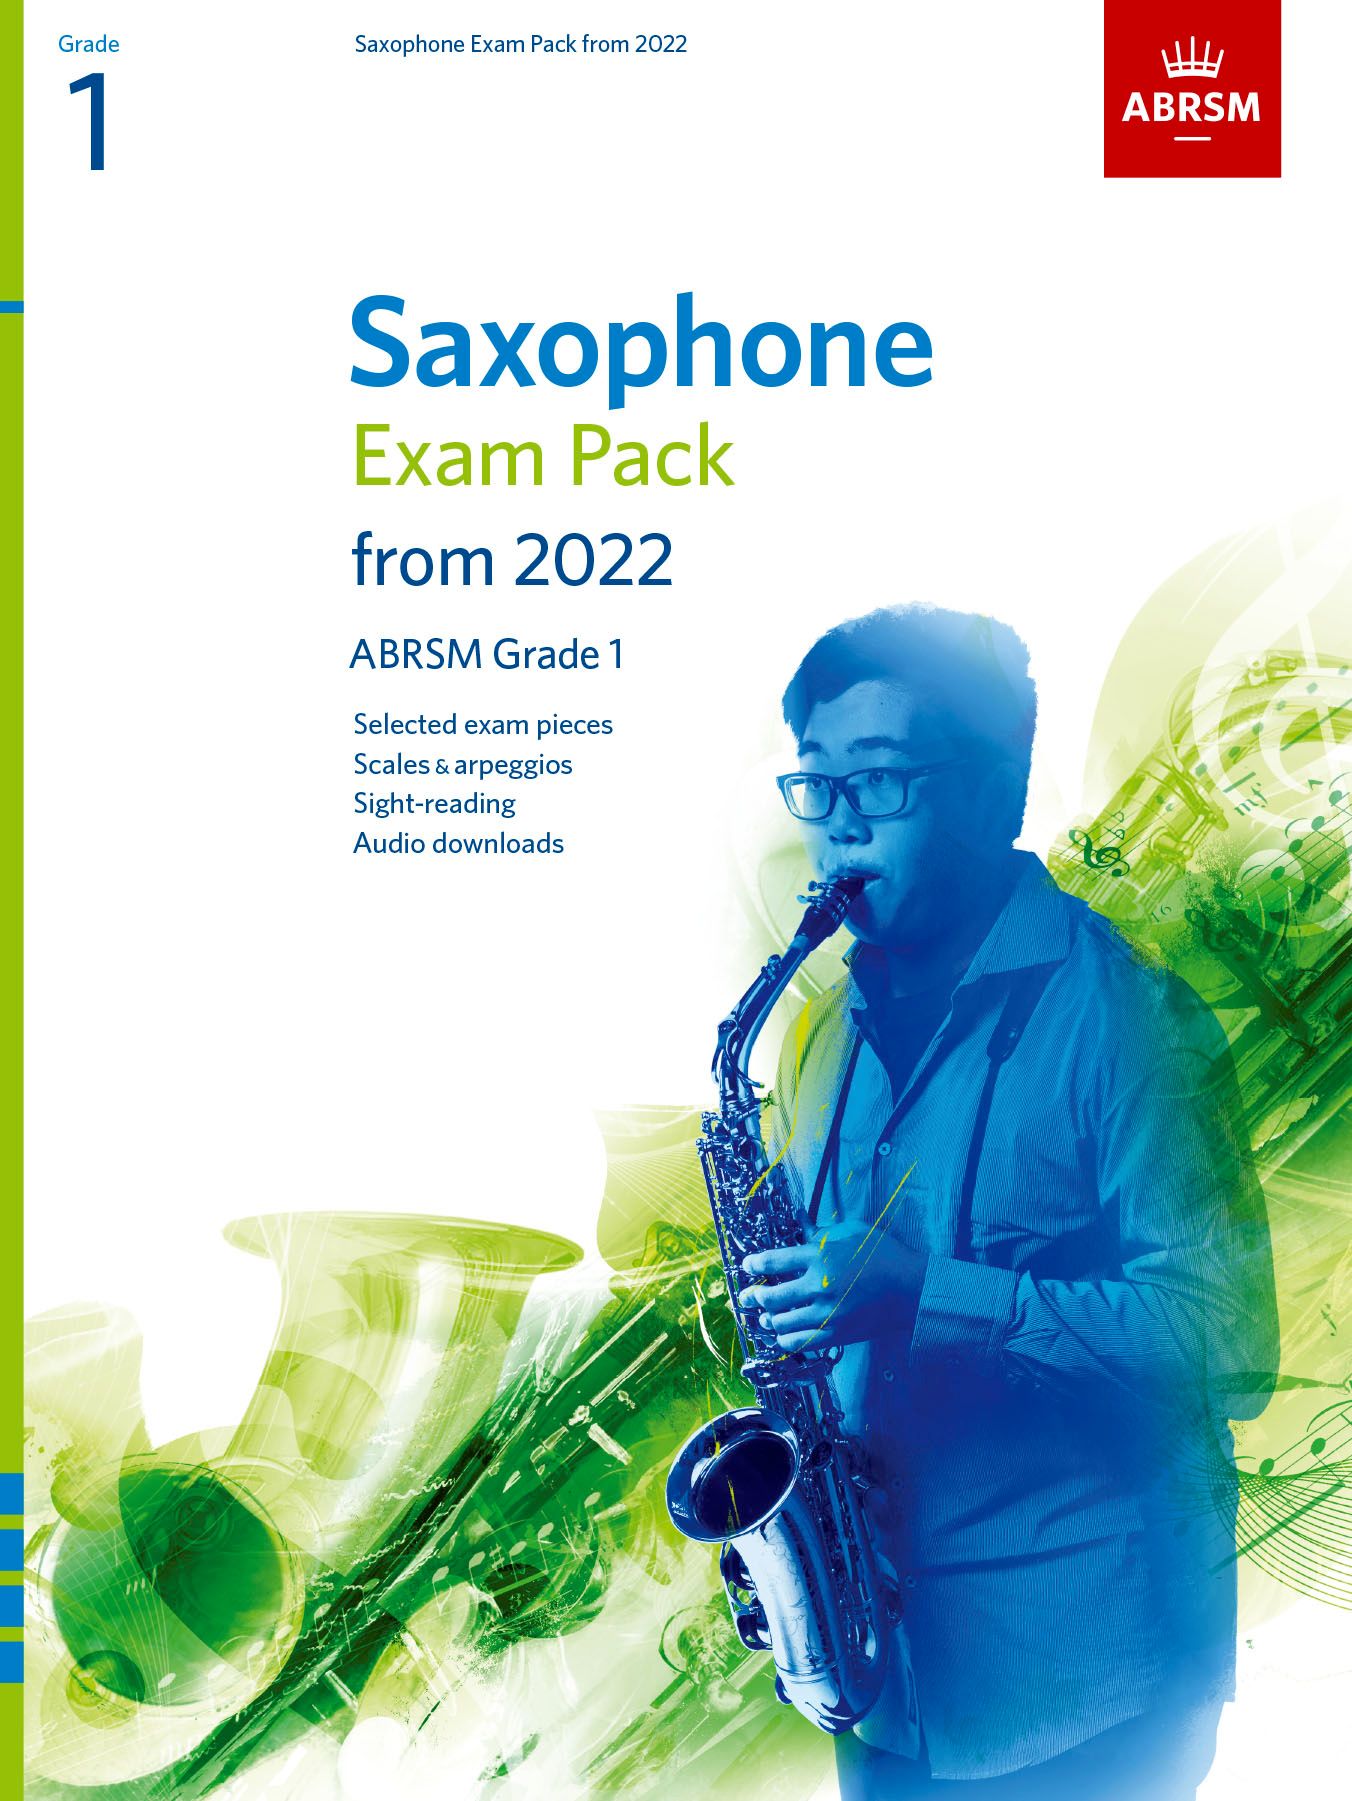 ABRSM Saxophone Exam Pack from 2022, ABRSM Grade 1